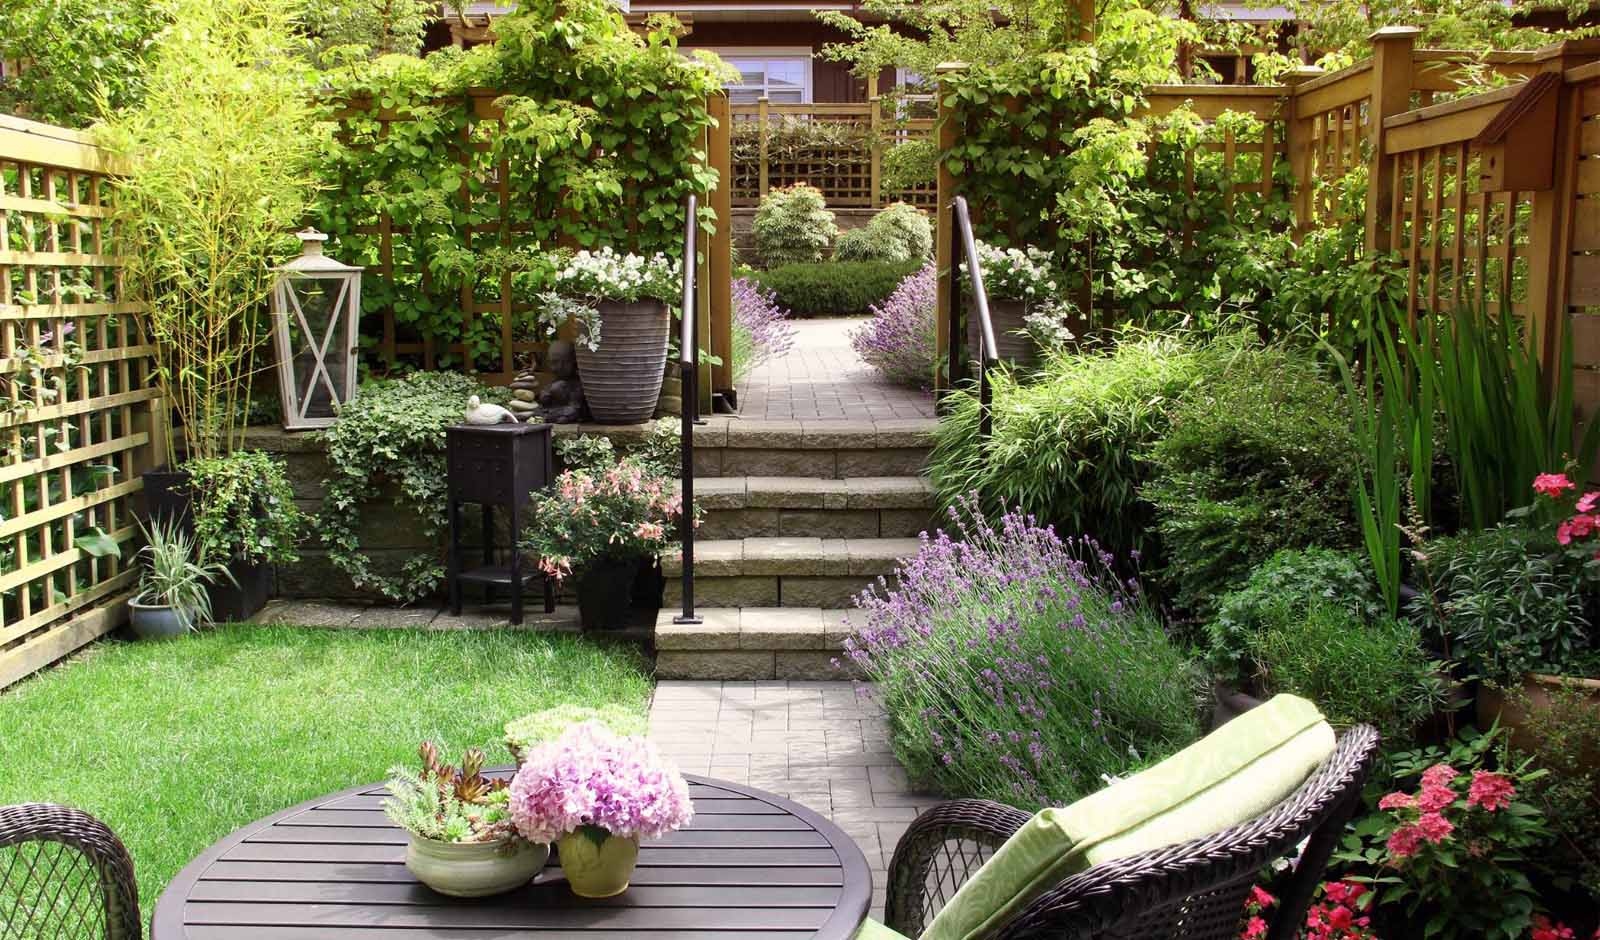 Garden design - Creating the perfect garden in 6 steps!